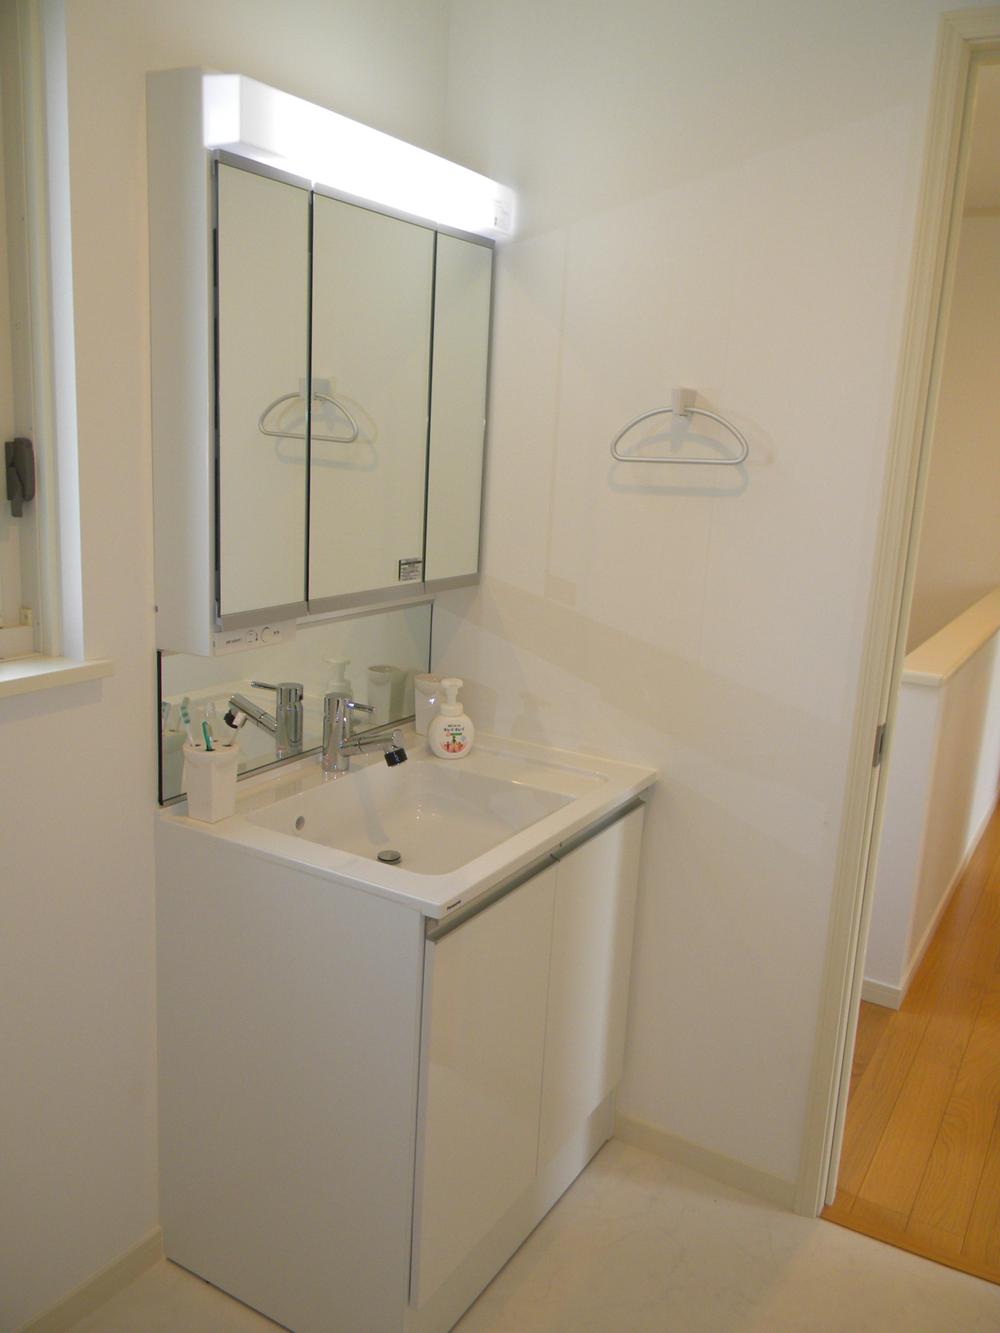 Wash basin, toilet. Three-sided mirror vanity that also includes Building E washroom storage